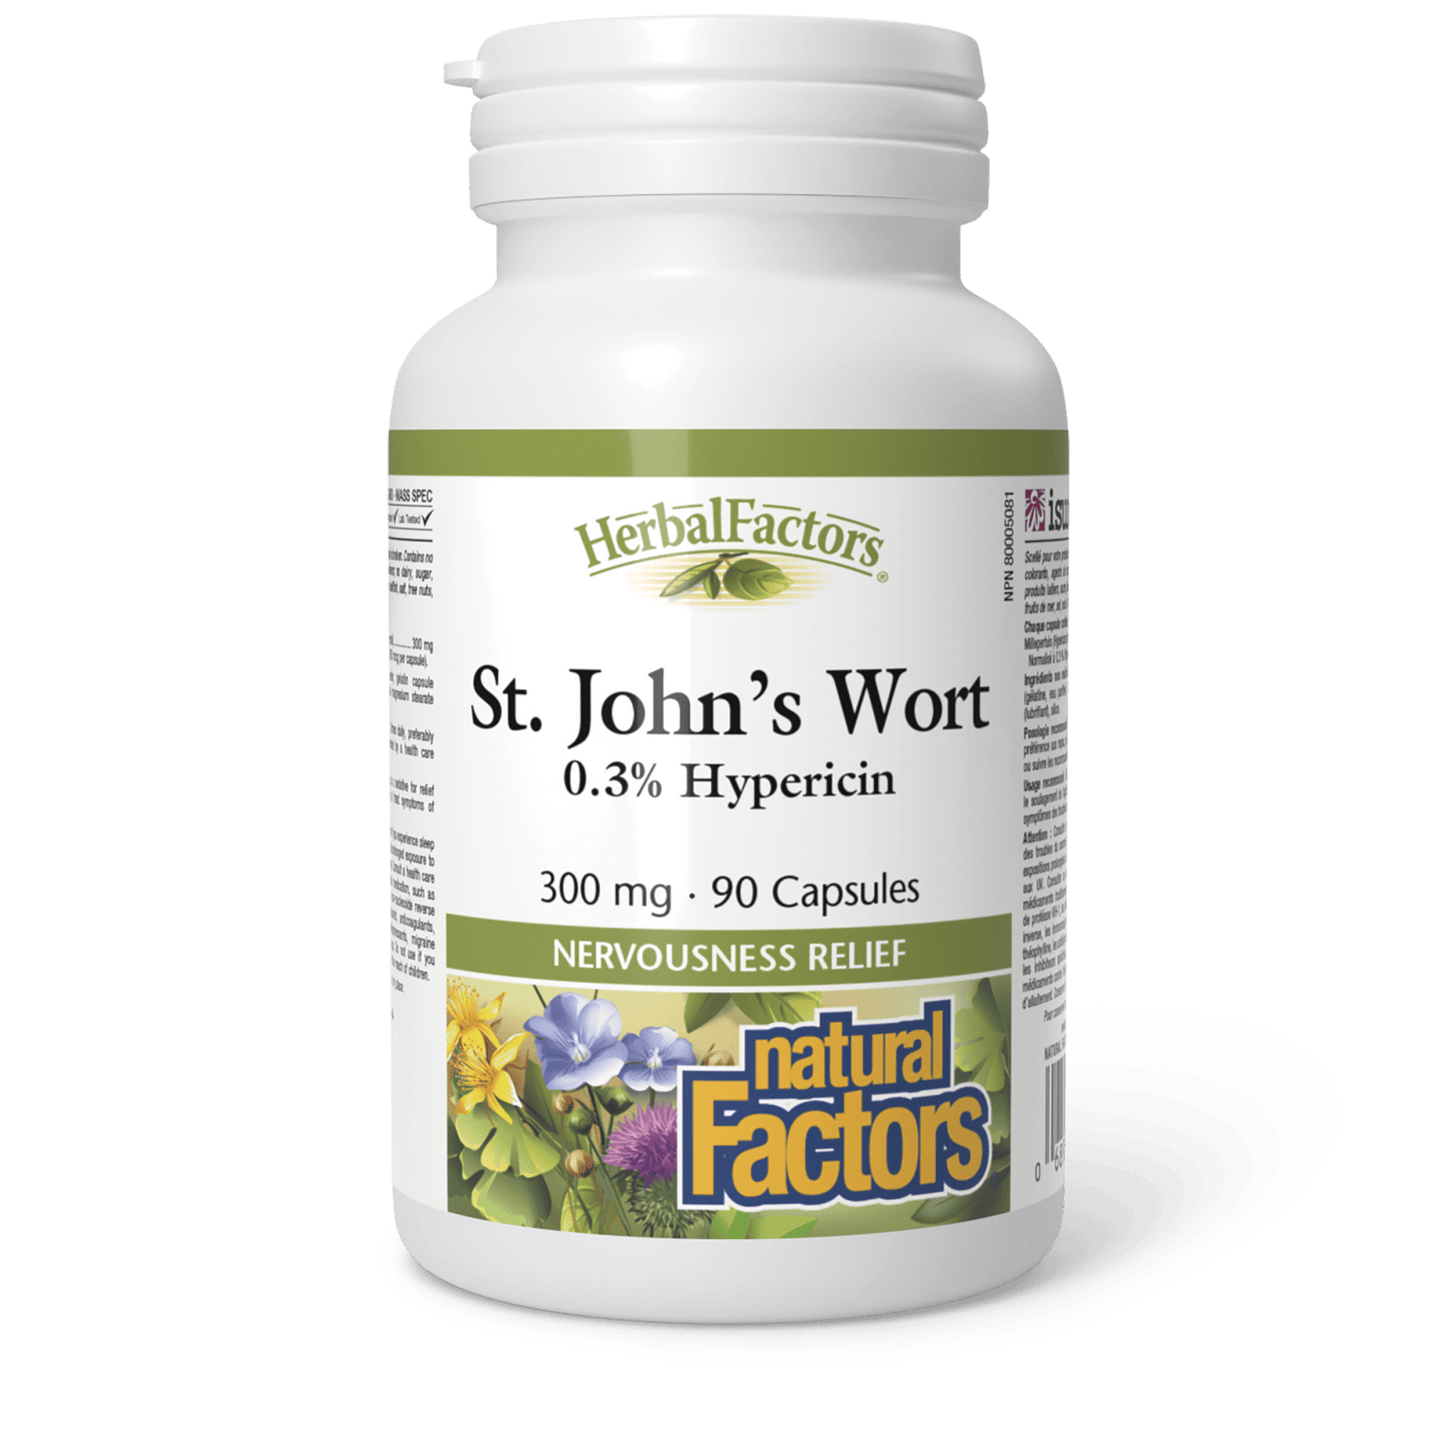 St. John’s Wort 300 mg, HerbalFactors, Natural Factors|v|image|4820